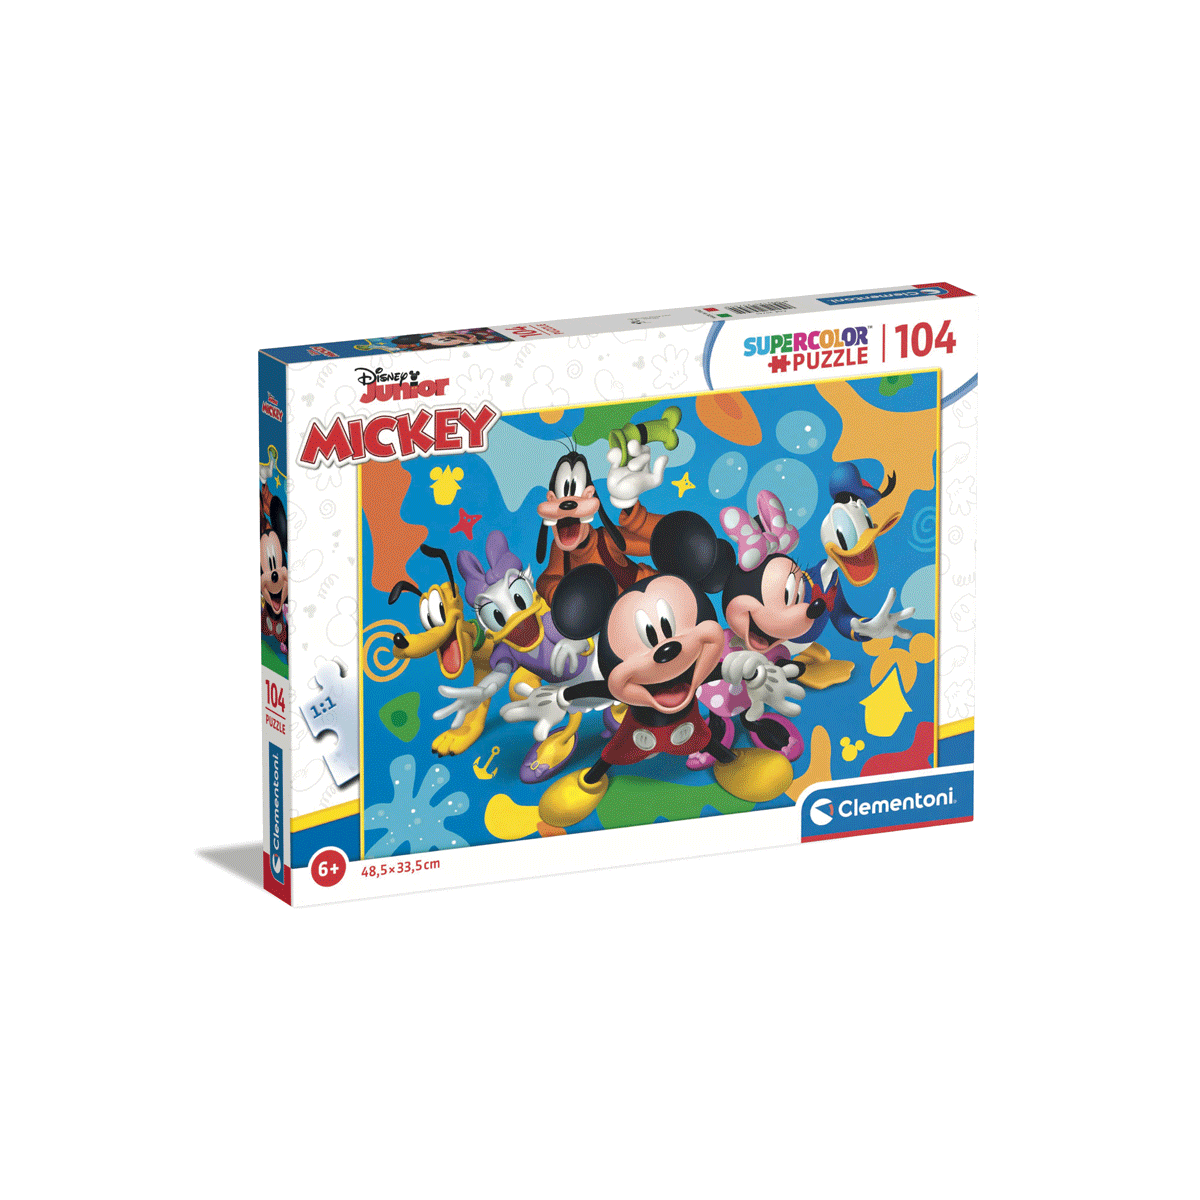 Clementoni supercolor puzzle - disney mickey and friends - 104 pezzi, puzzle bambini 6 anni - CLEMENTONI